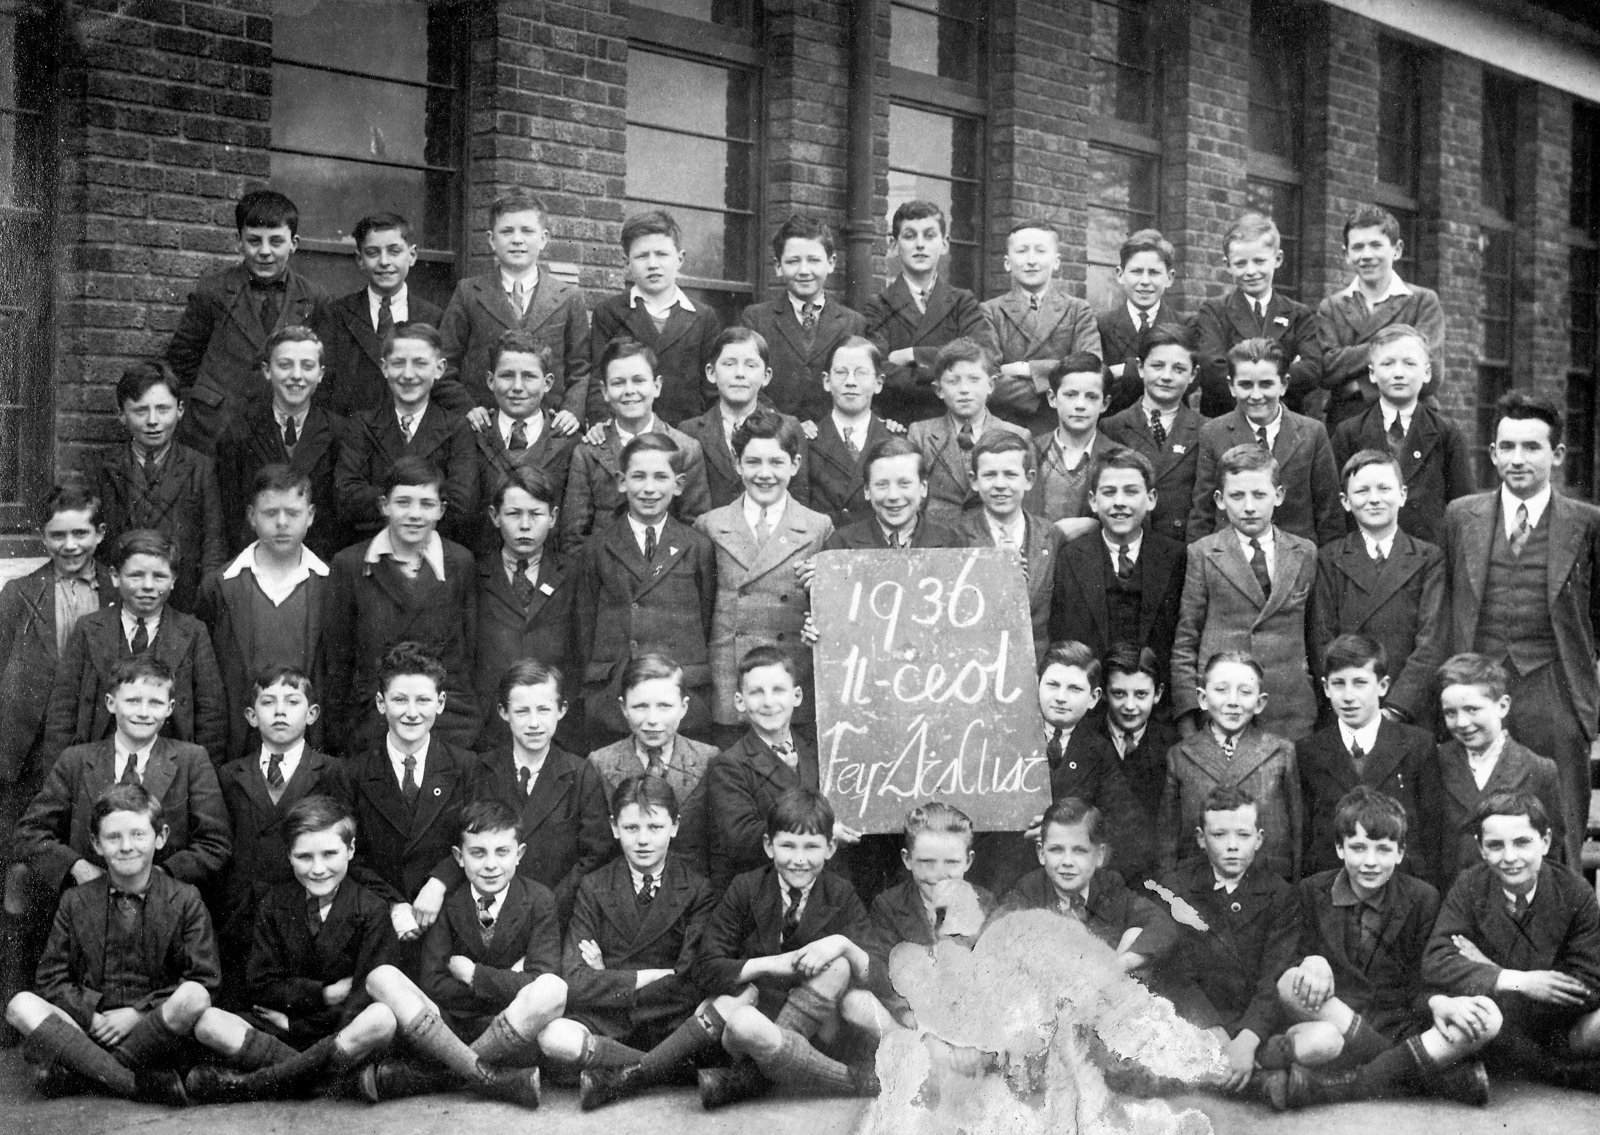 St Vincent's School, Glasnevin, Dublin, 1936.